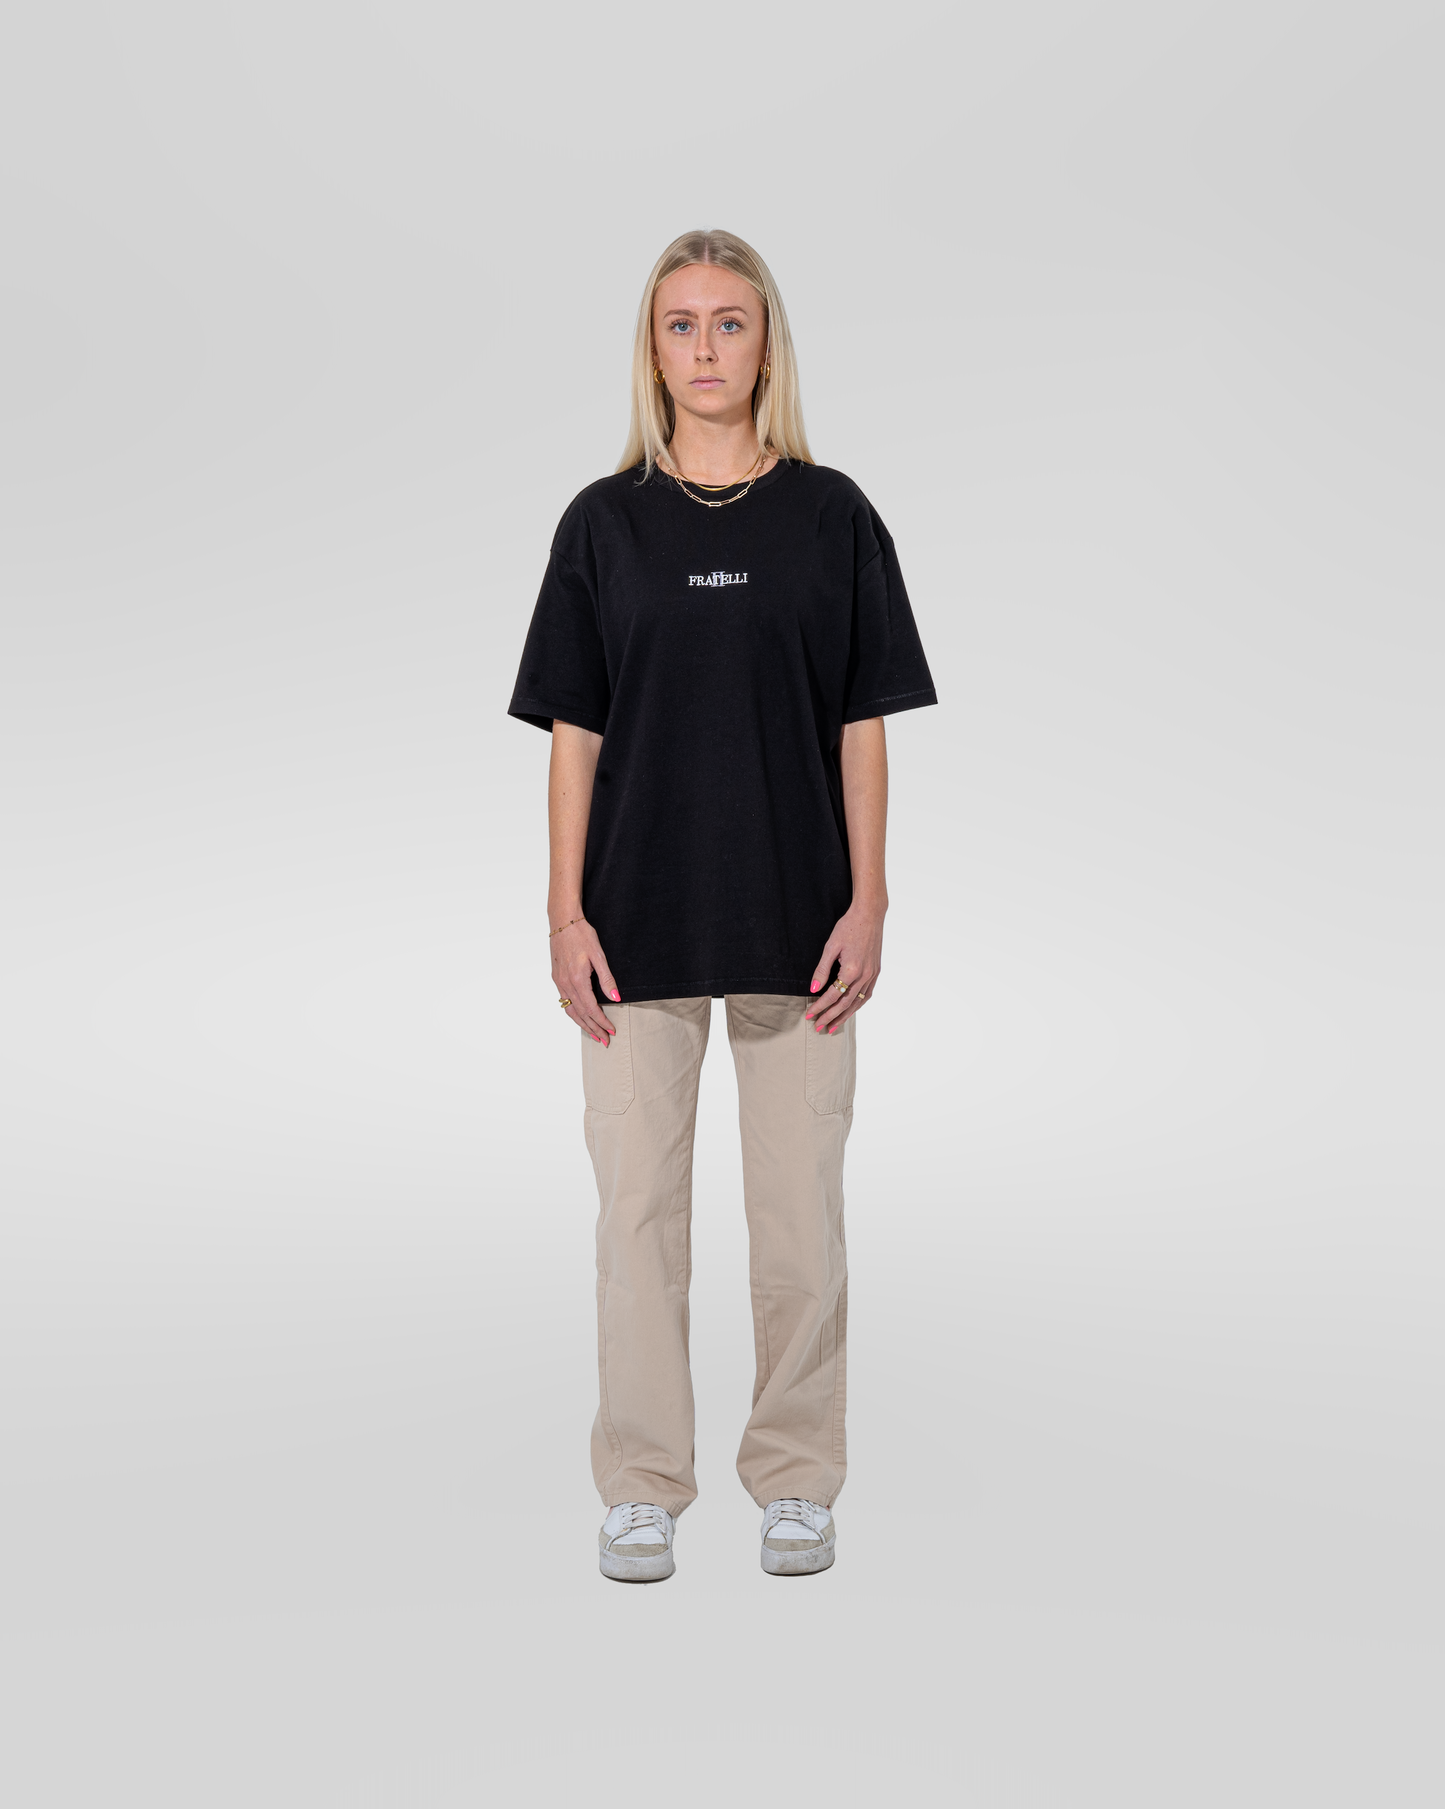 2FRATELLI Oversized T-Shirt schwarz women (unisex) - 2FRATELLI